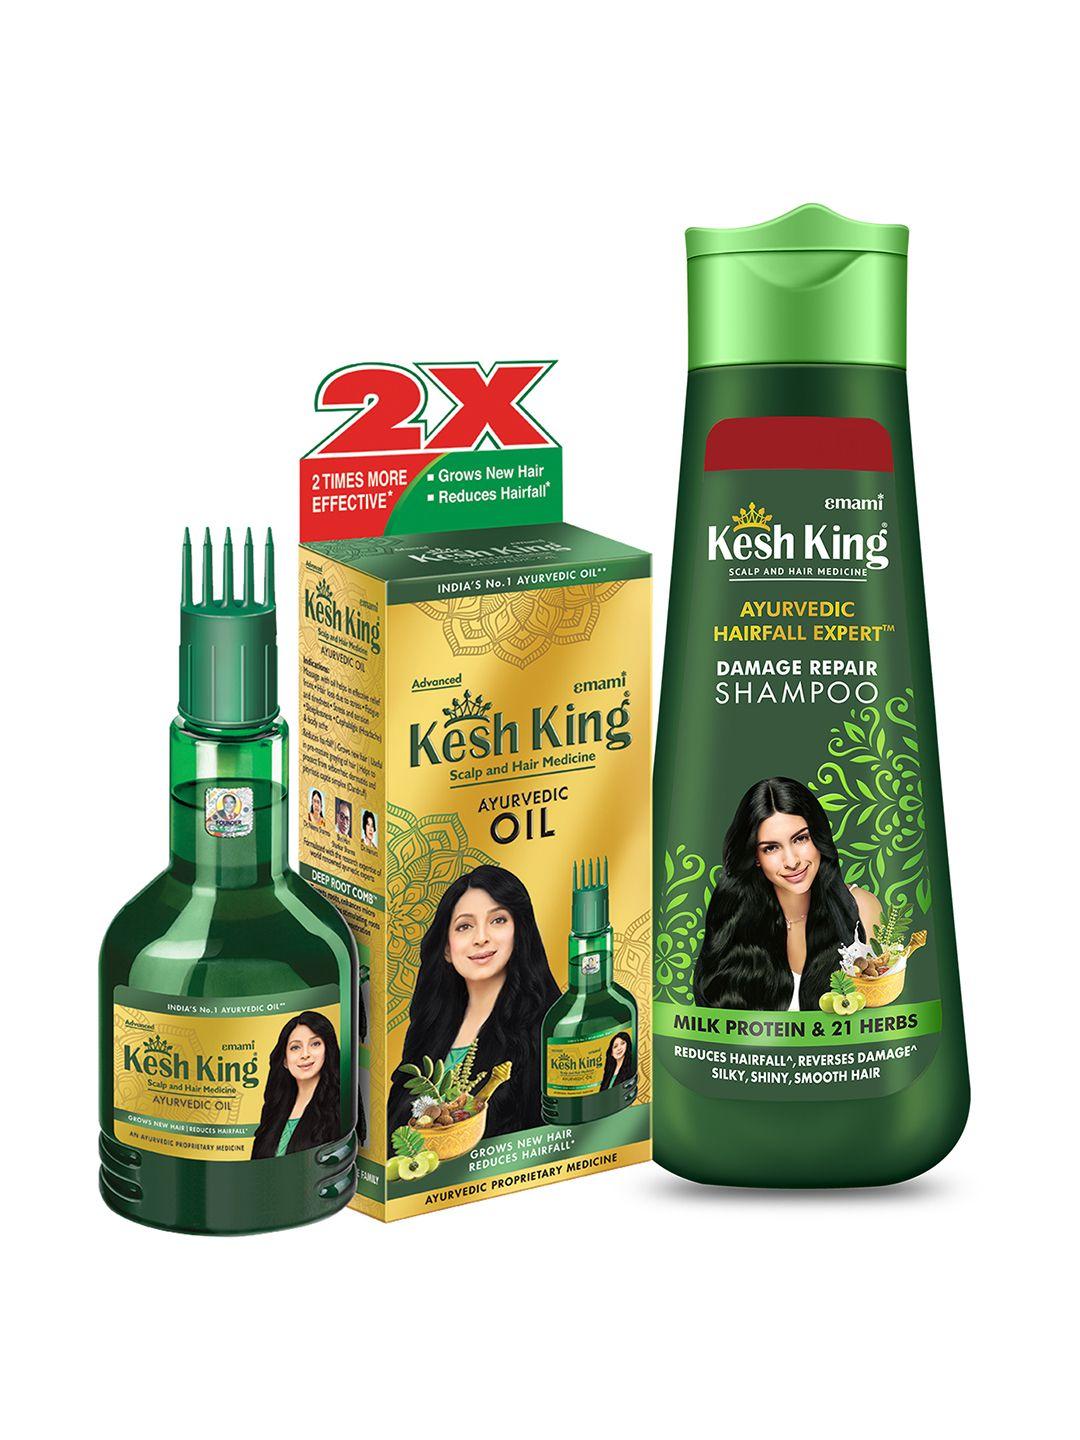 kesh king set of ayurvedic oil 300 ml & damage repair shampoo 340 ml